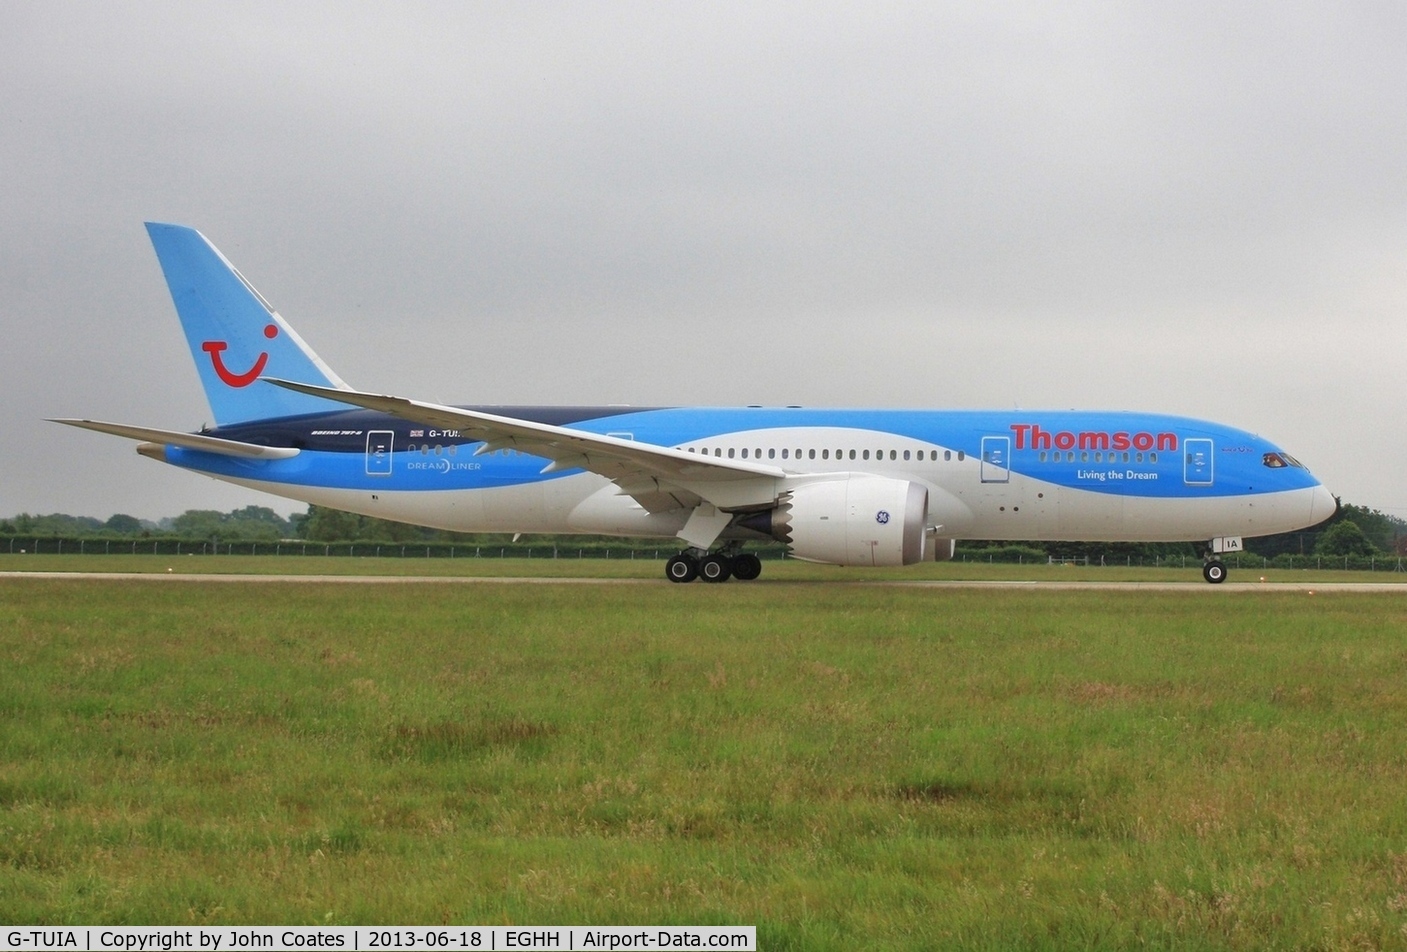 G-TUIA, 2013 Boeing 787-8 Dreamliner C/N 34422, Backtracking 08 to depart training visit.